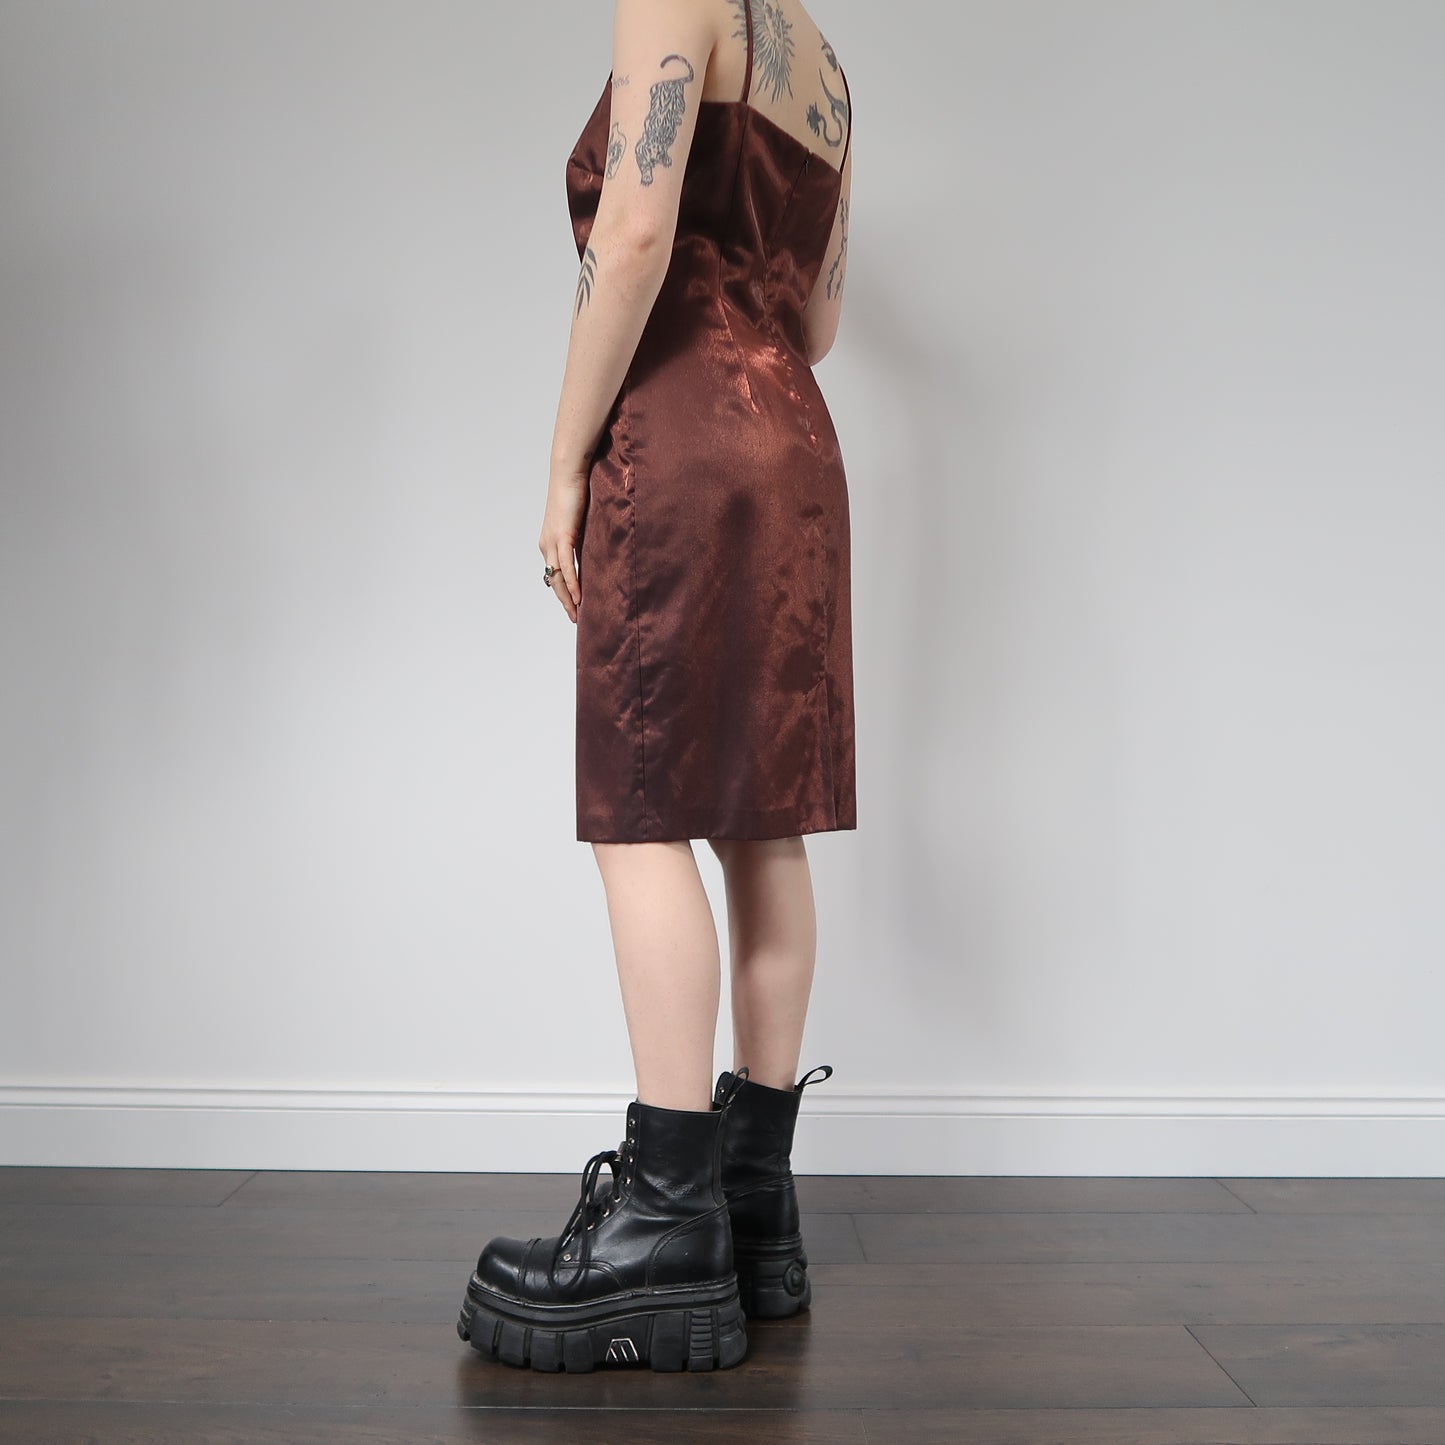 Copper dress - size 12